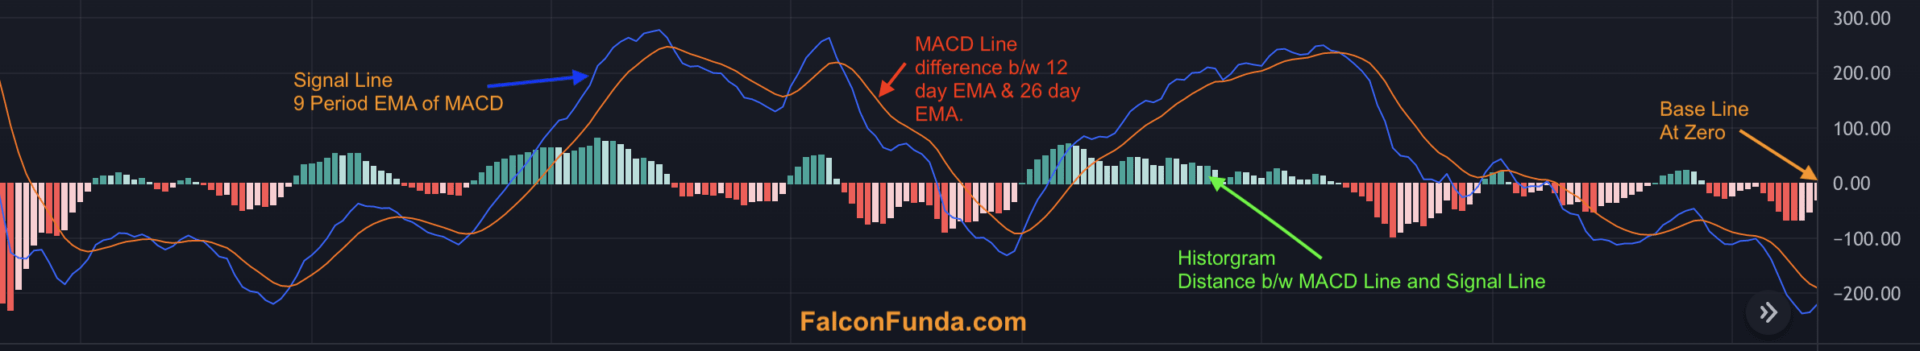 Trading Indicator – Moving Average Convergence Divergence (MACD)